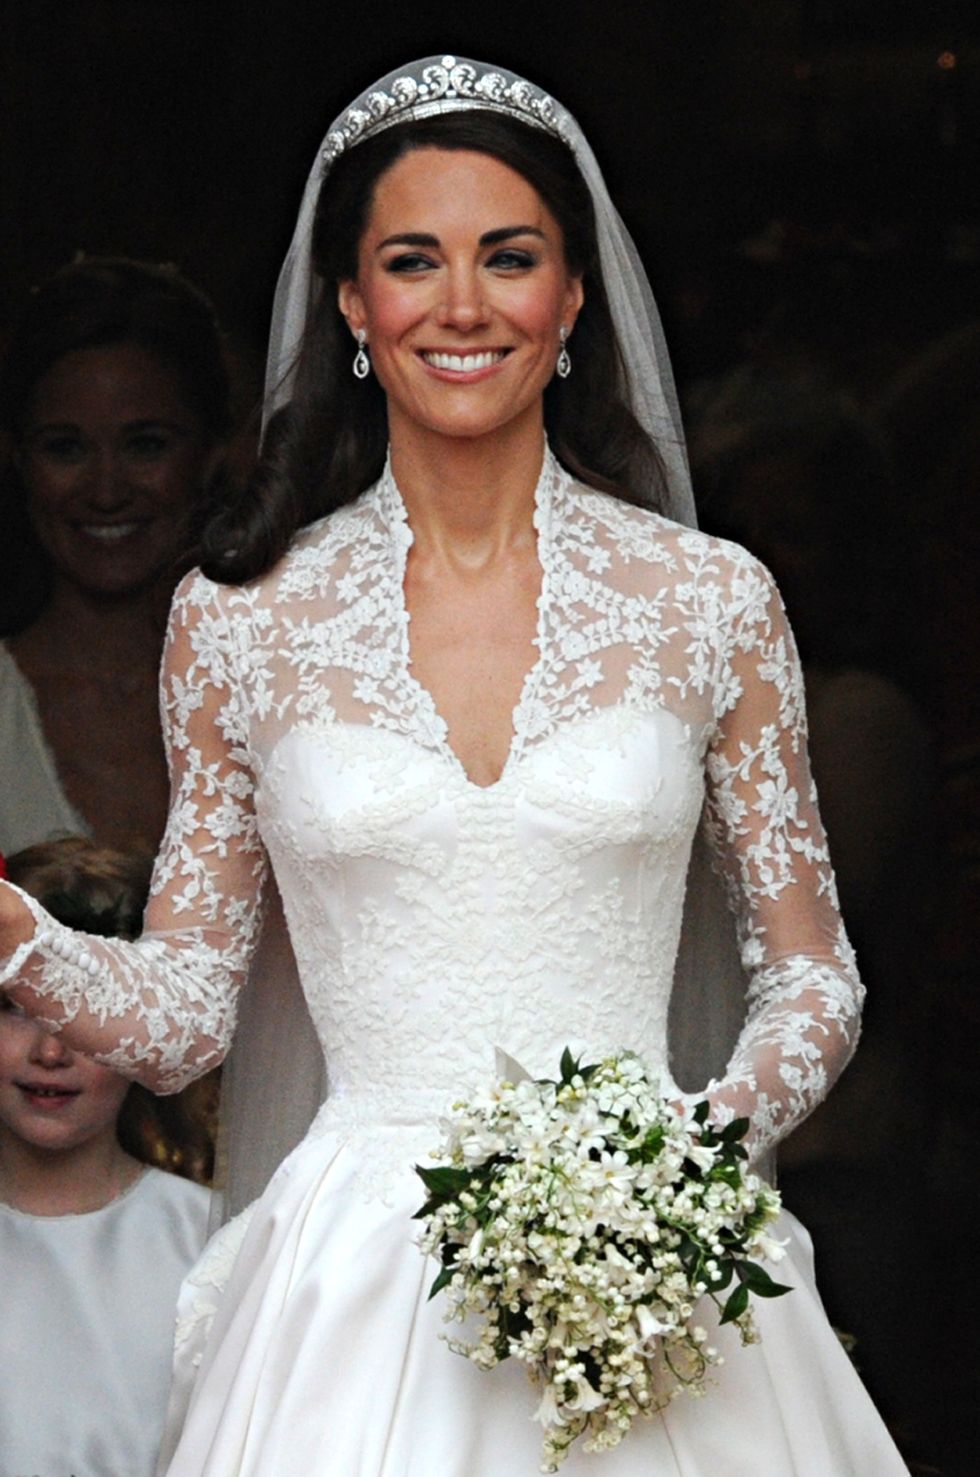 Kate Middleton, Duchess of Cambridge, wedding bouquet